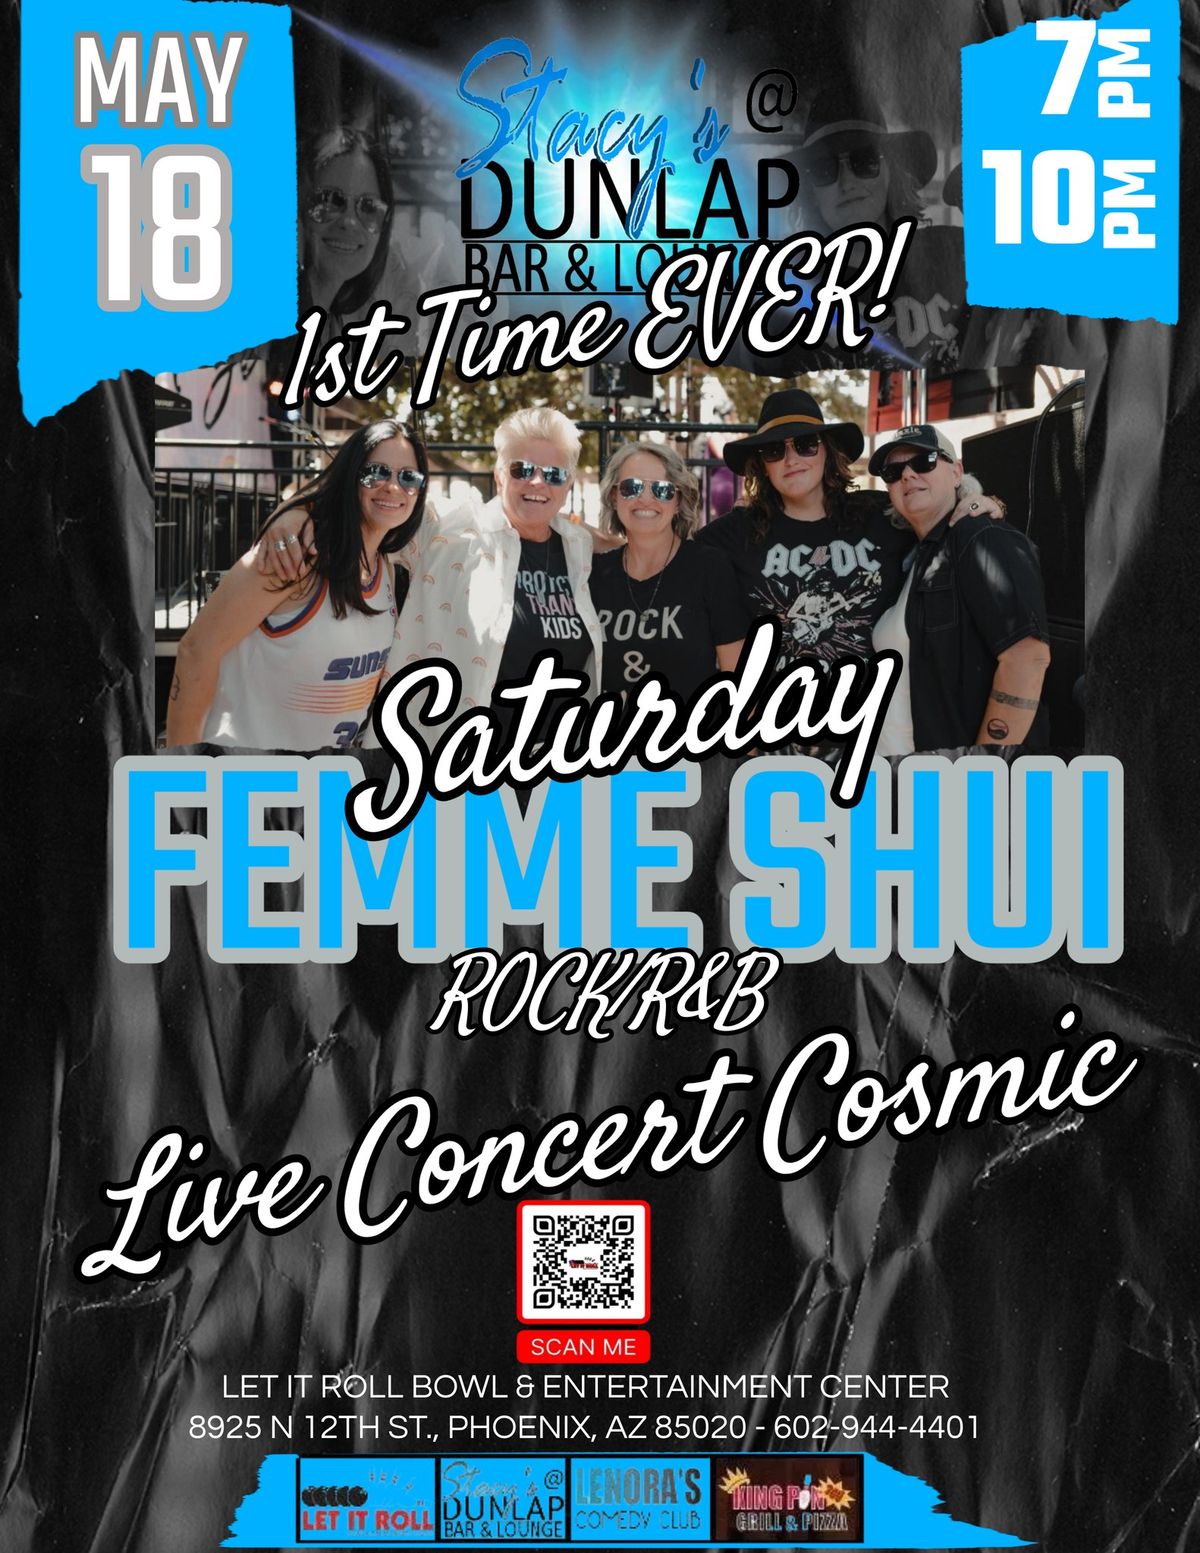 Concert Cosmic Event Live!